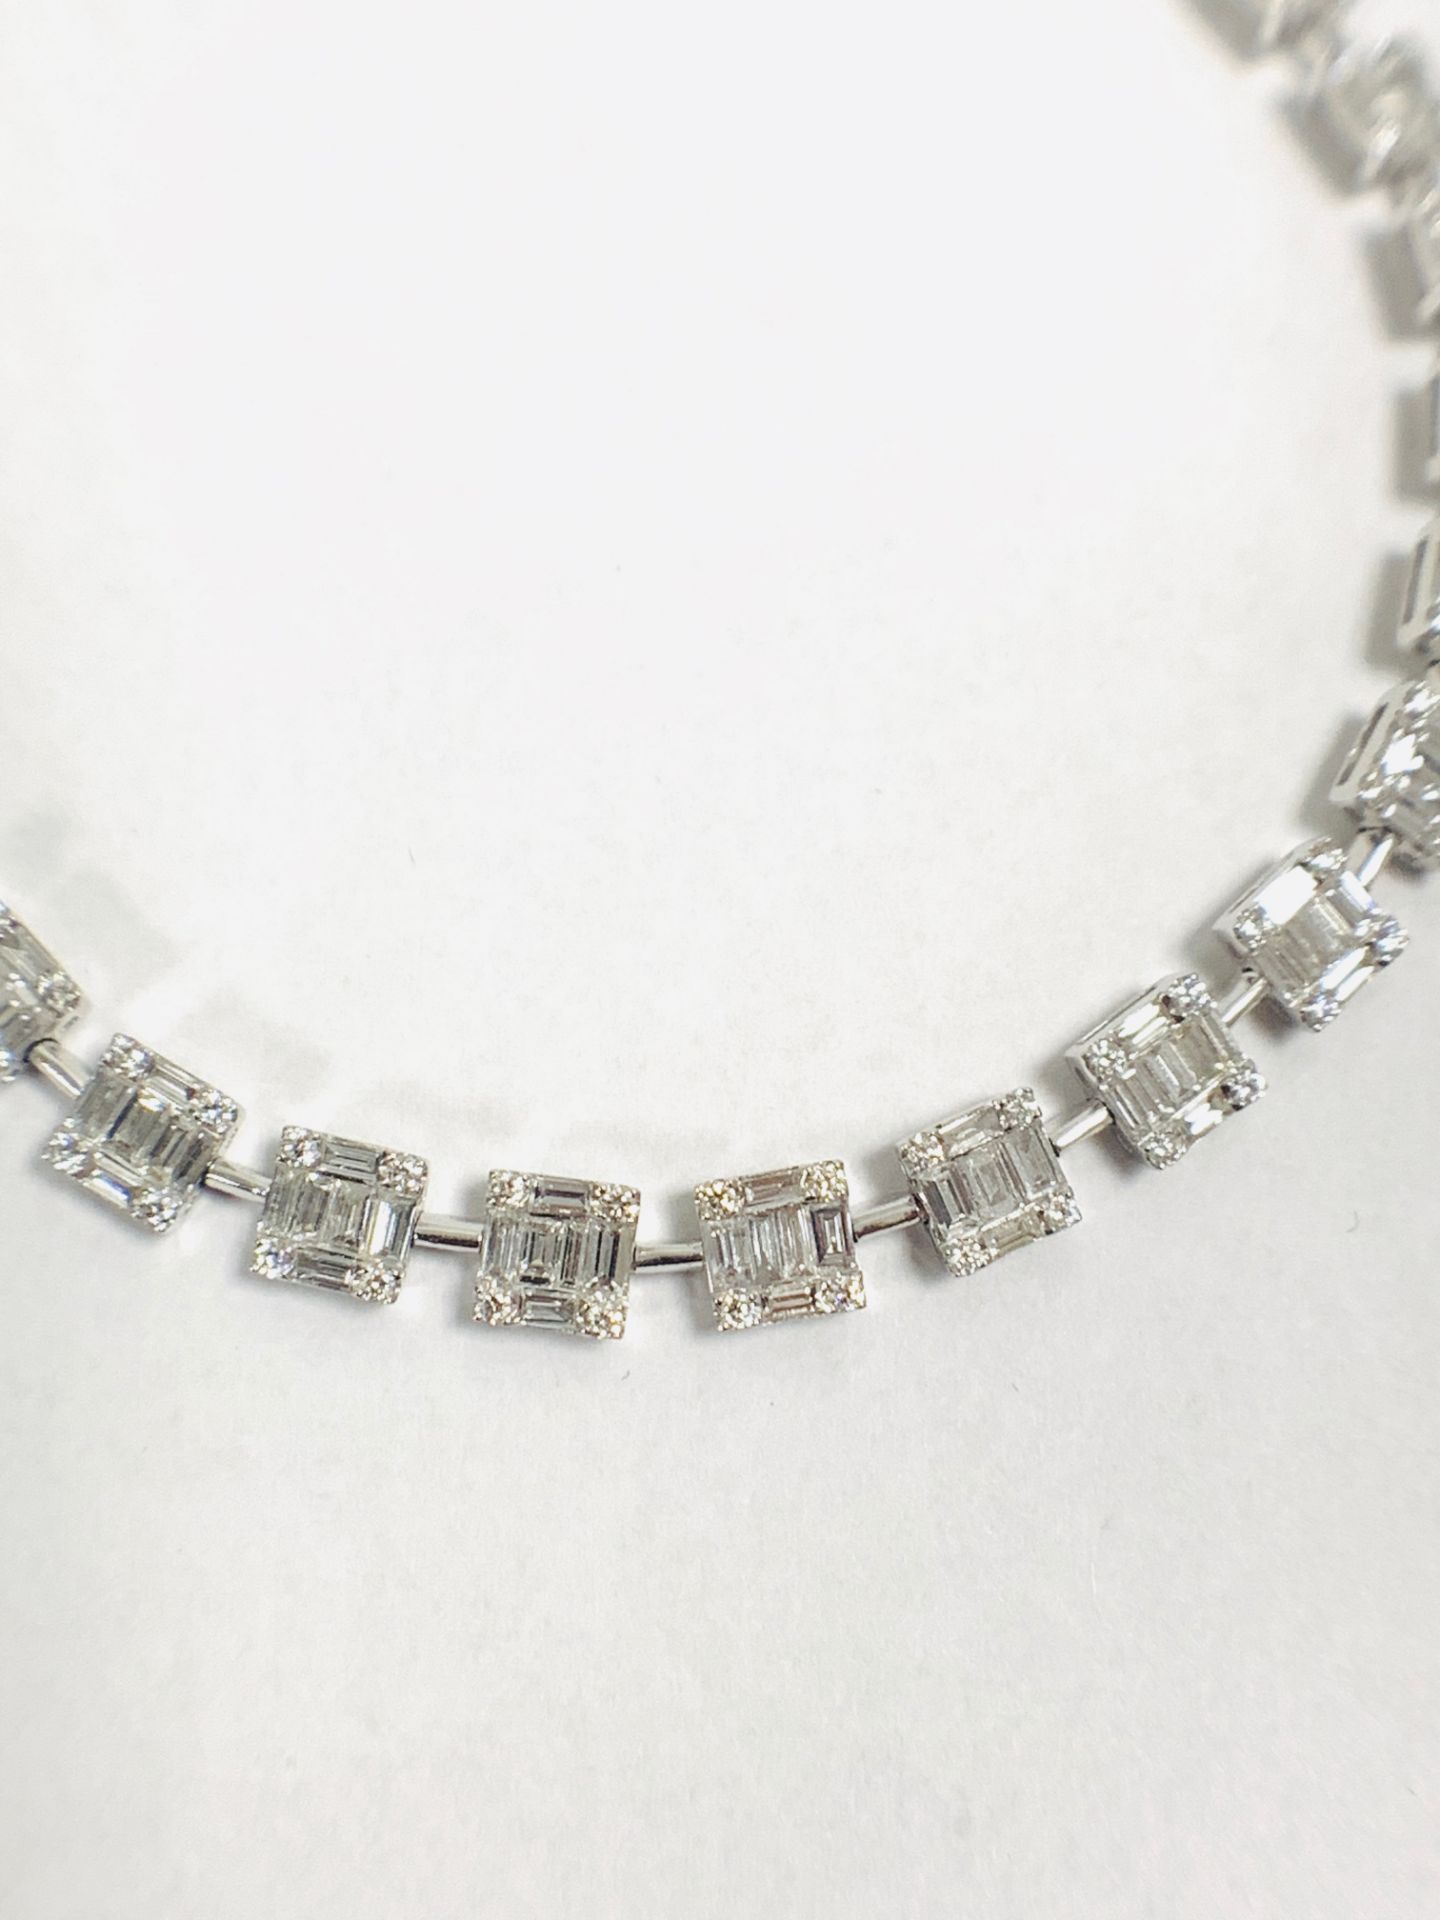 18ct White Gold Diamond Bracelet - Image 4 of 14